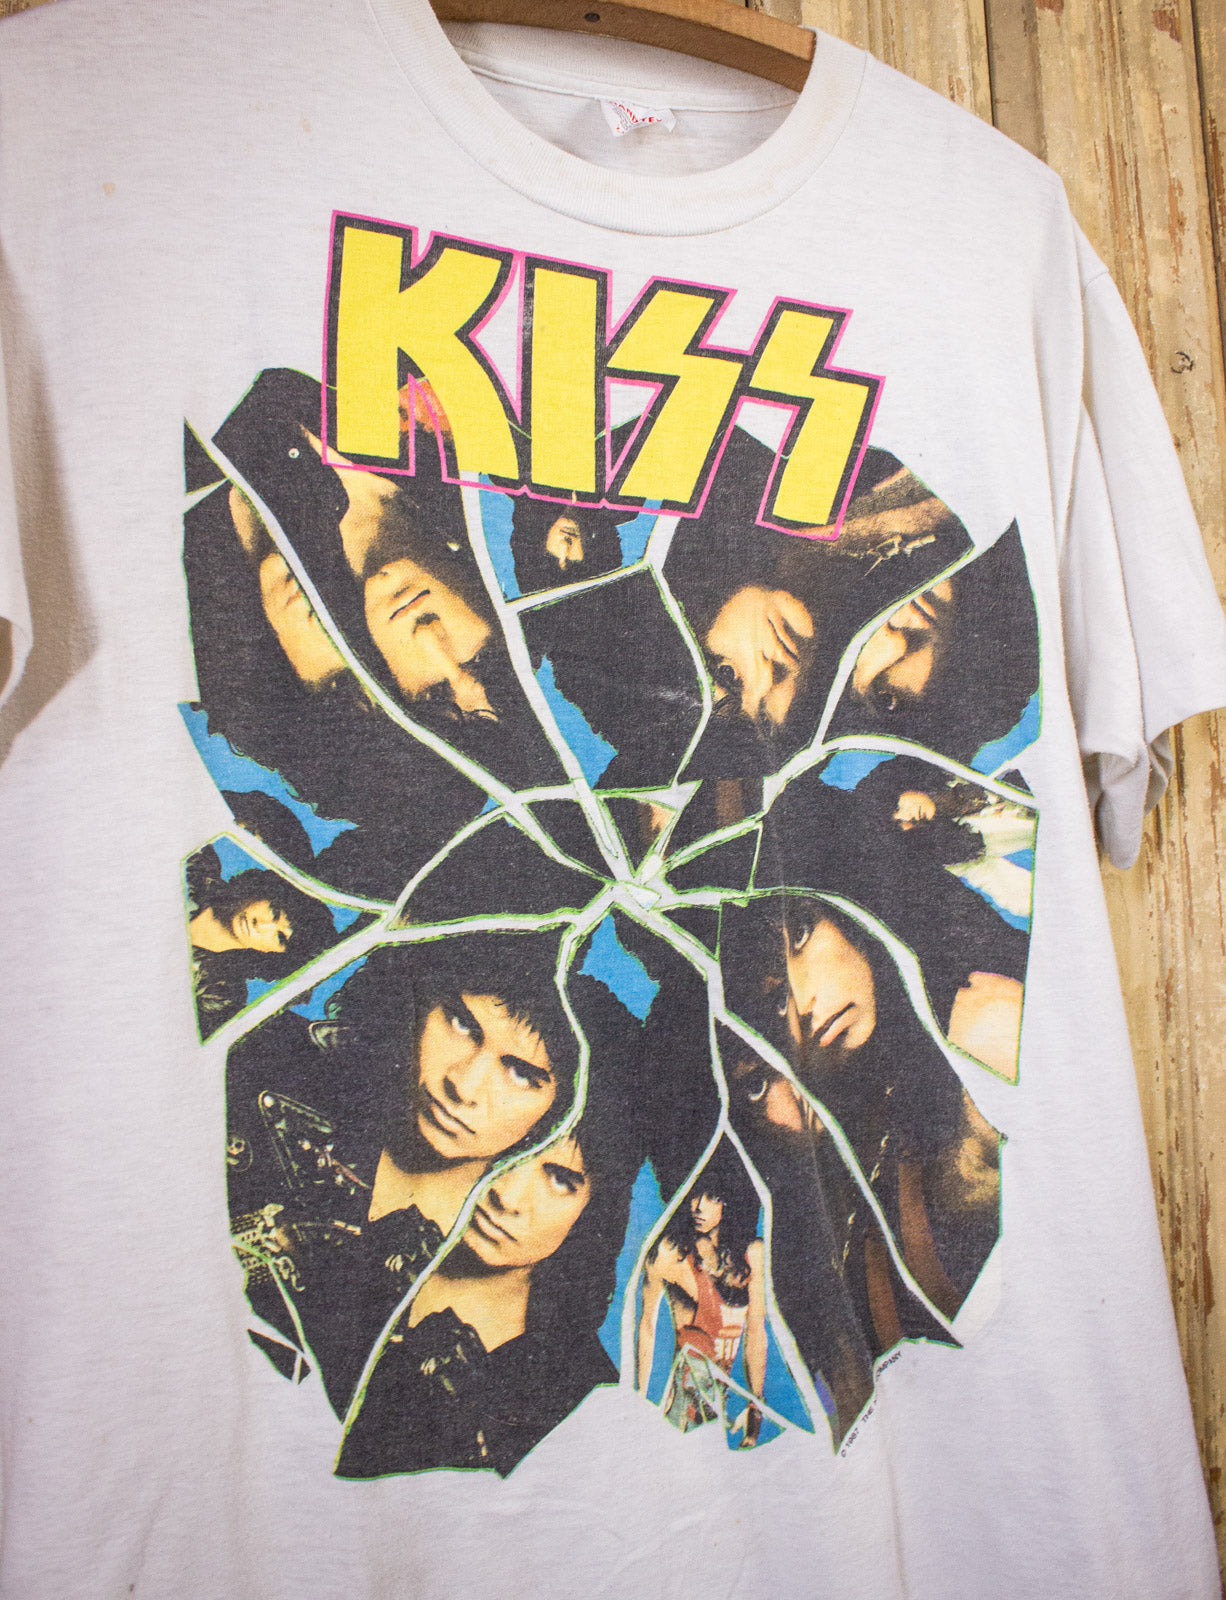 Vintage Kiss I Went Crazy Concert T Shirt 1987 White Large